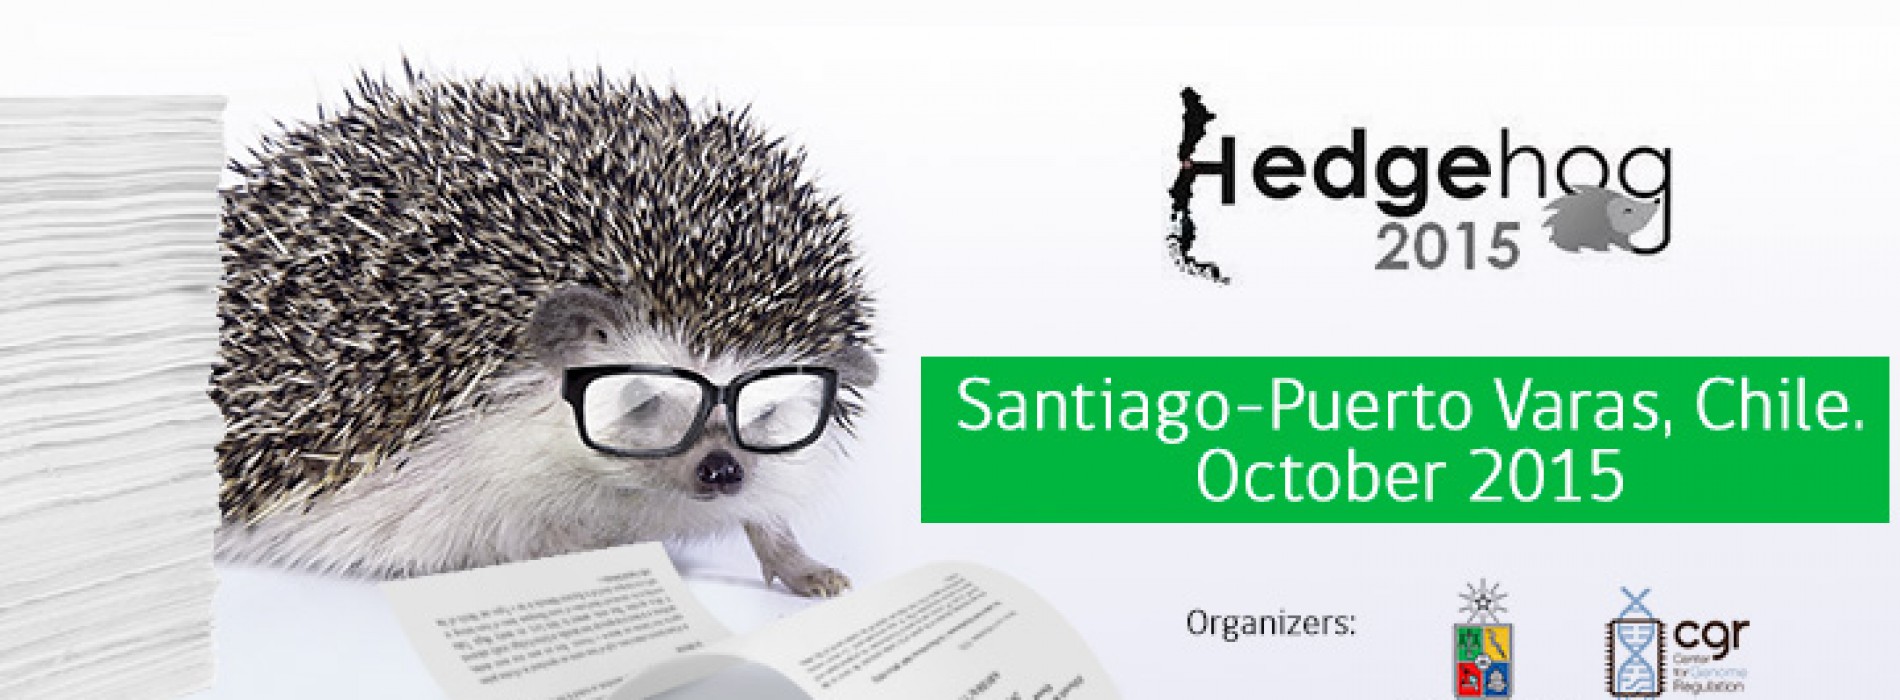 Puerto Varas – Hedgehog Conference.- Mechanisms of Hedgehog Signalling in Development, Tissue repair and Cancer